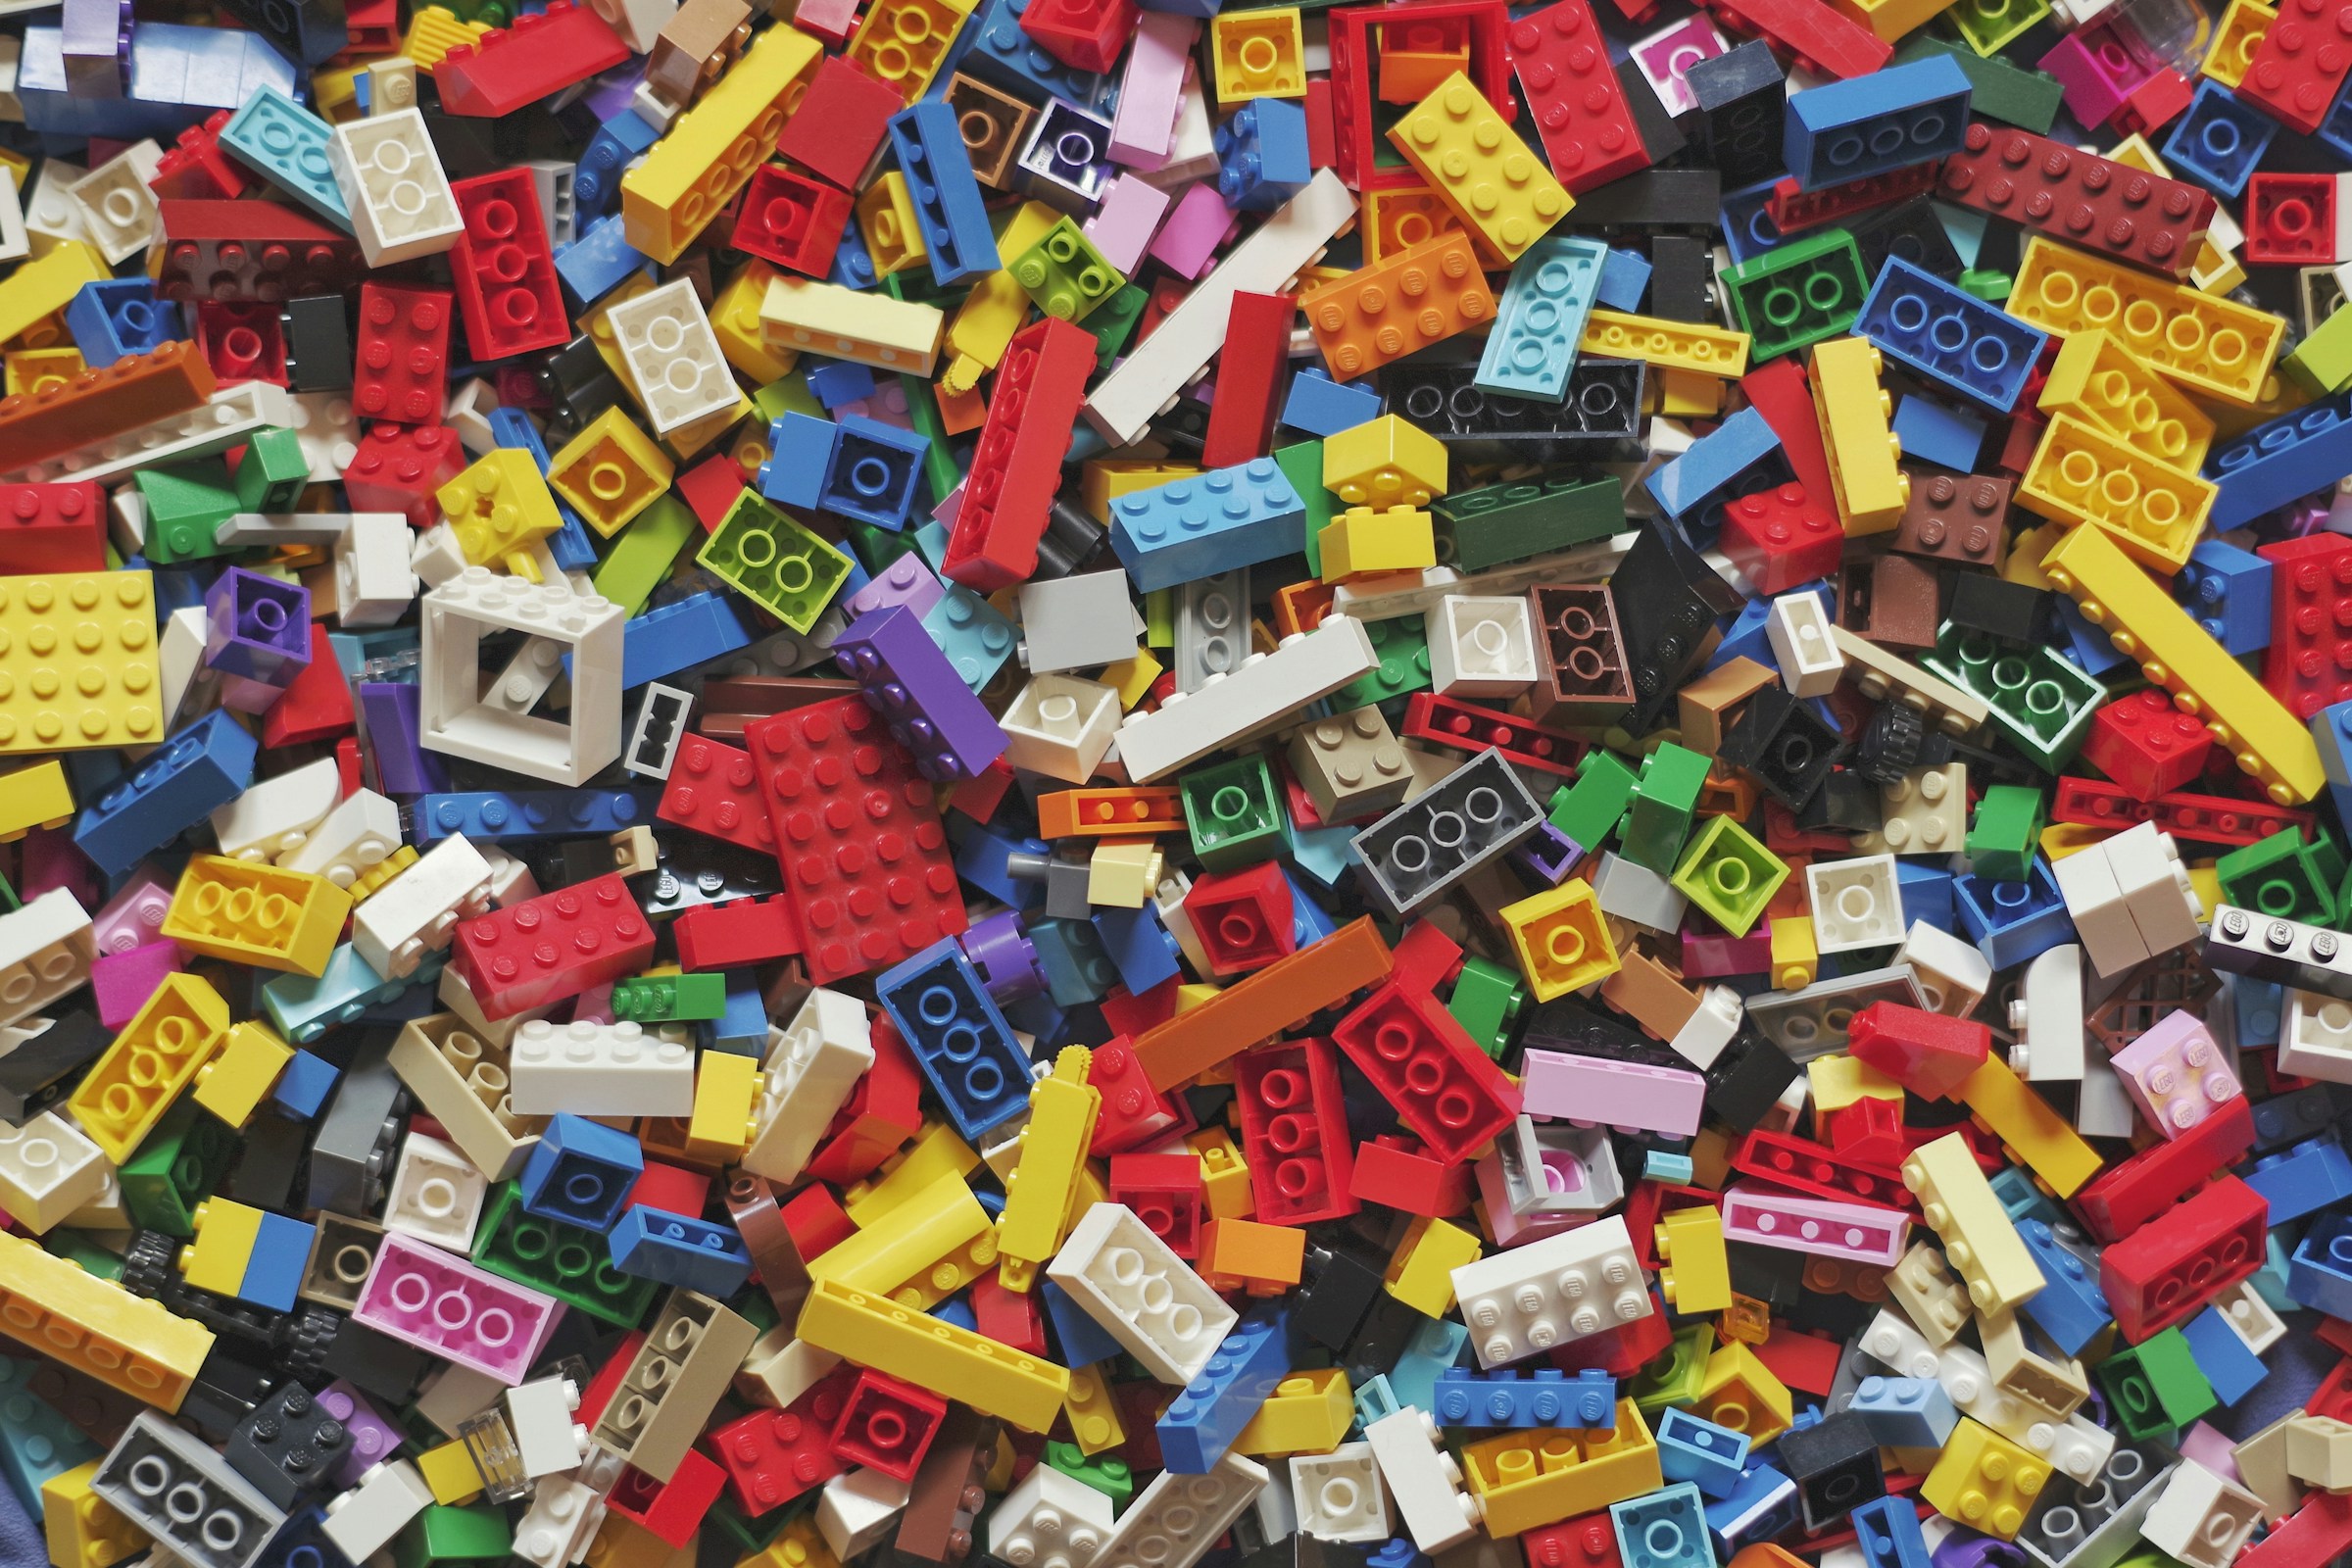 Different colored lego blocks | Source: Unsplash